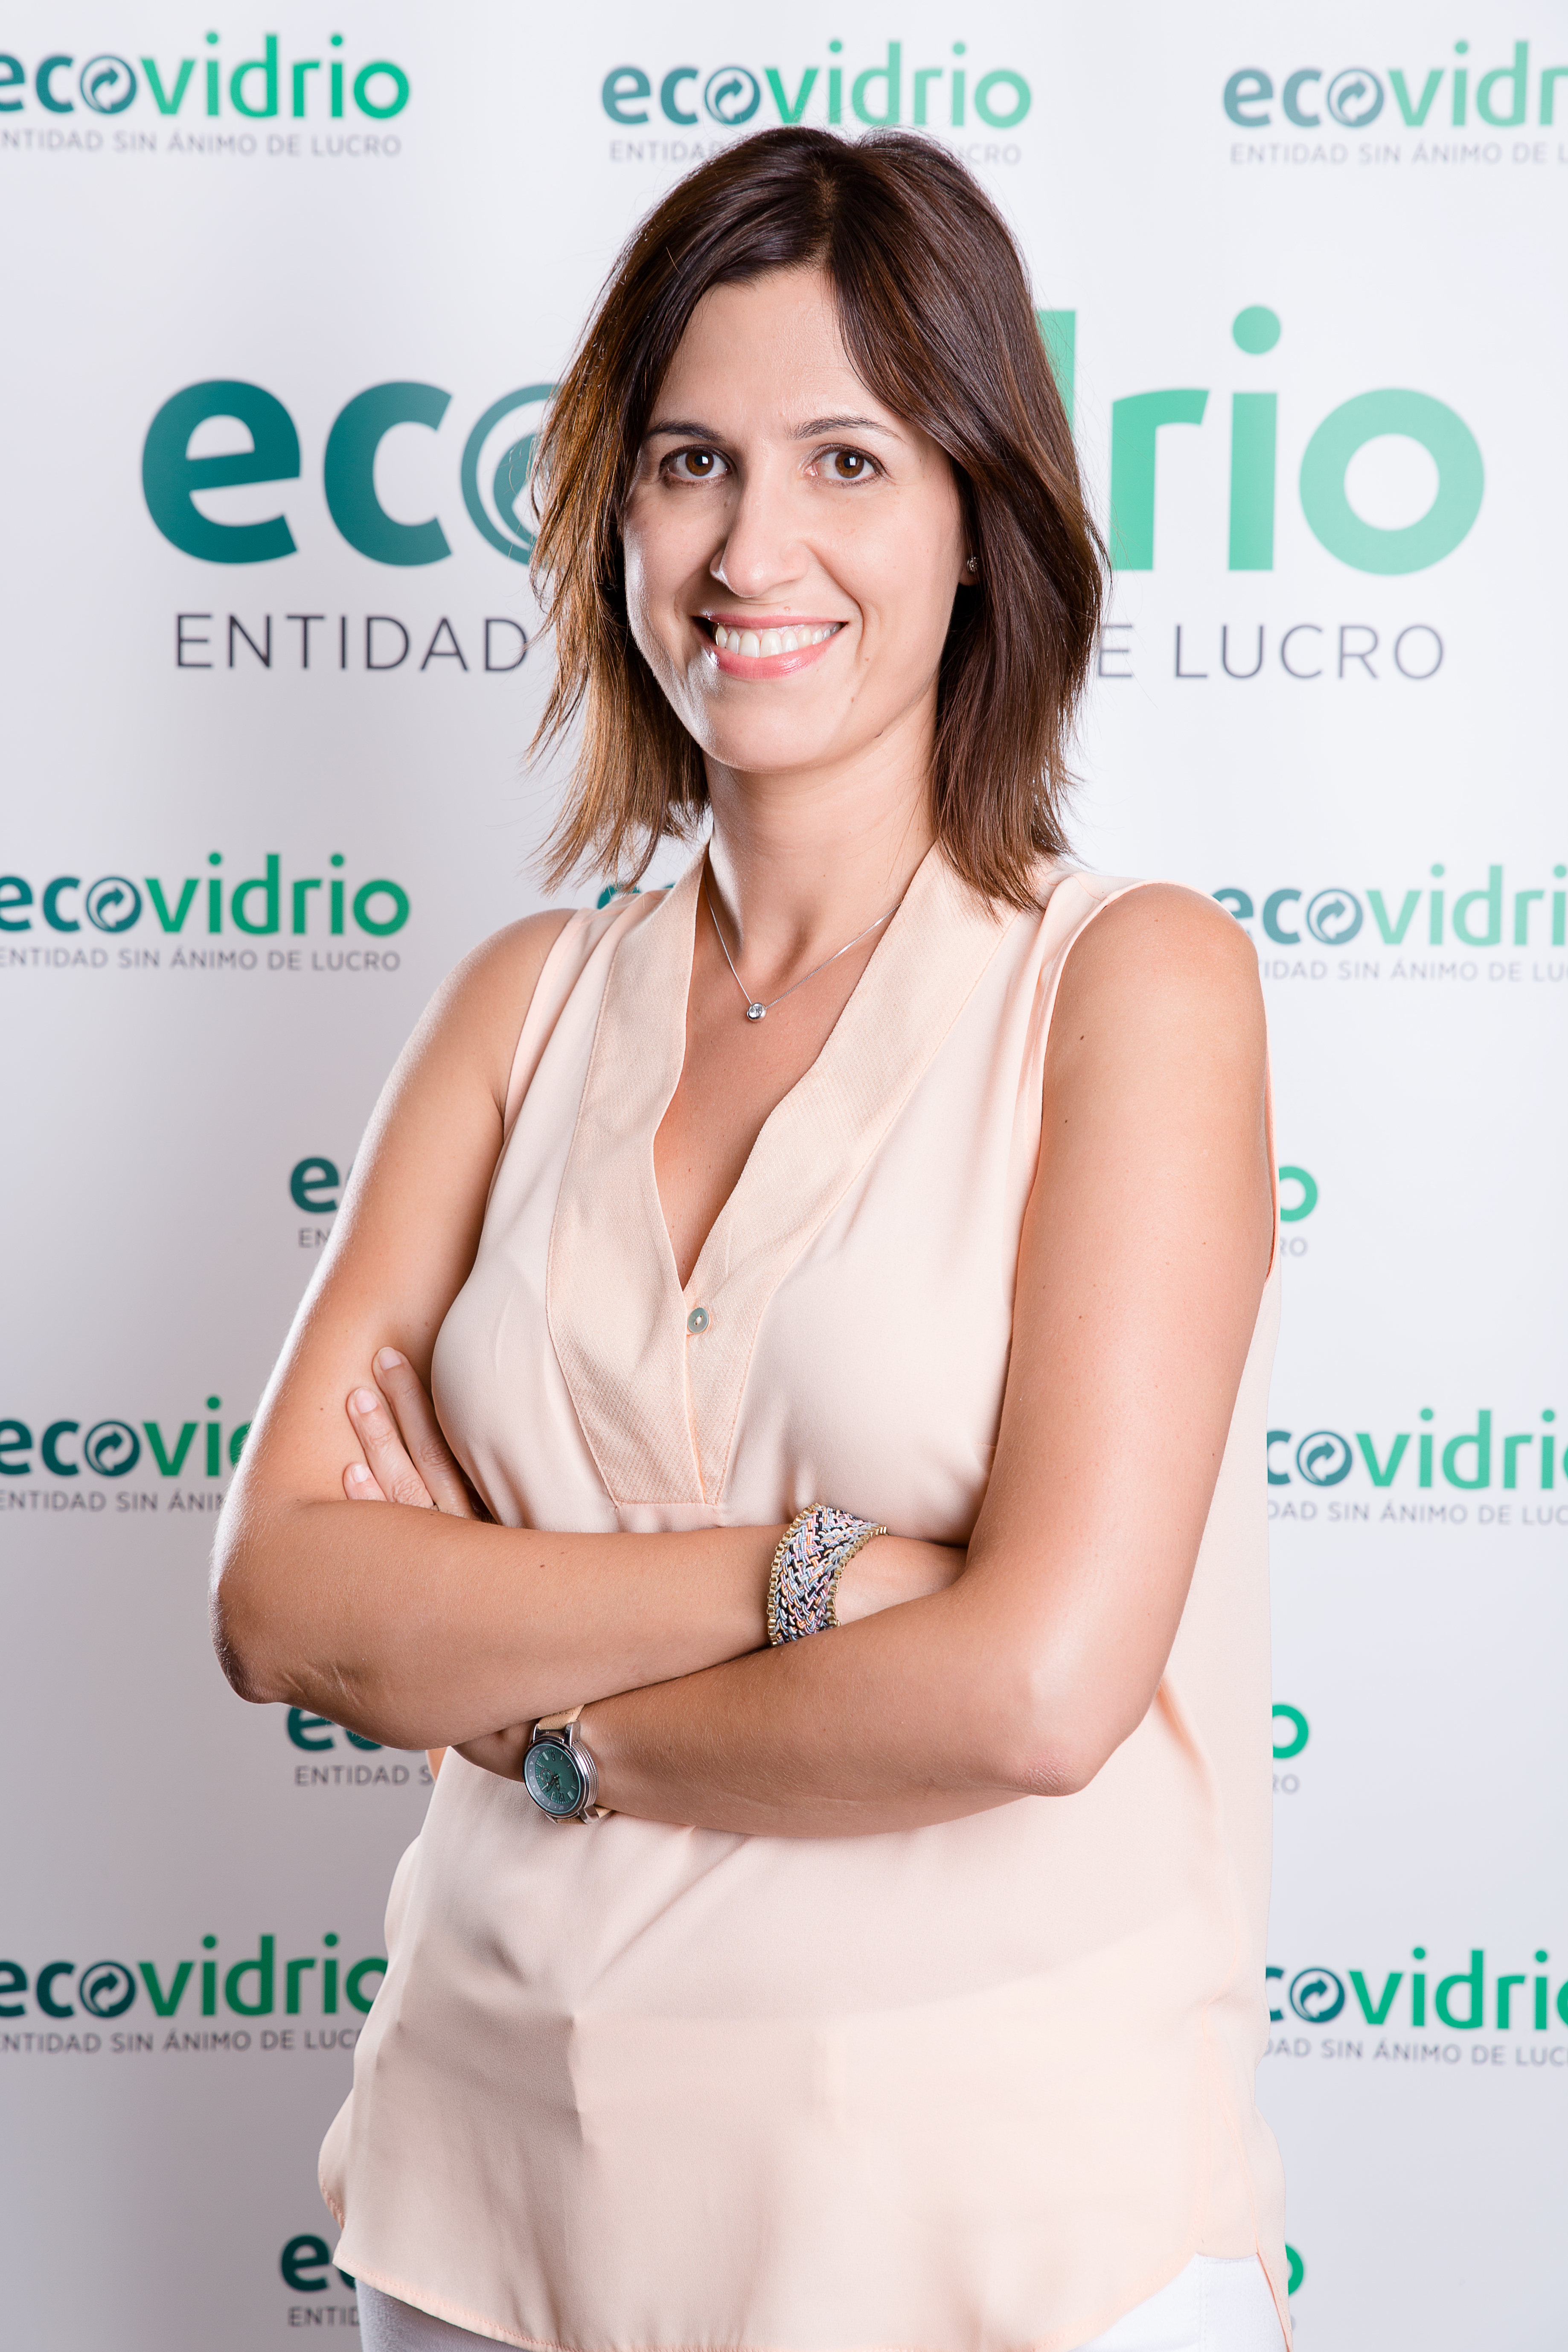 Silvia Mayo, Gerent de Catalunya d'Ecovidrio